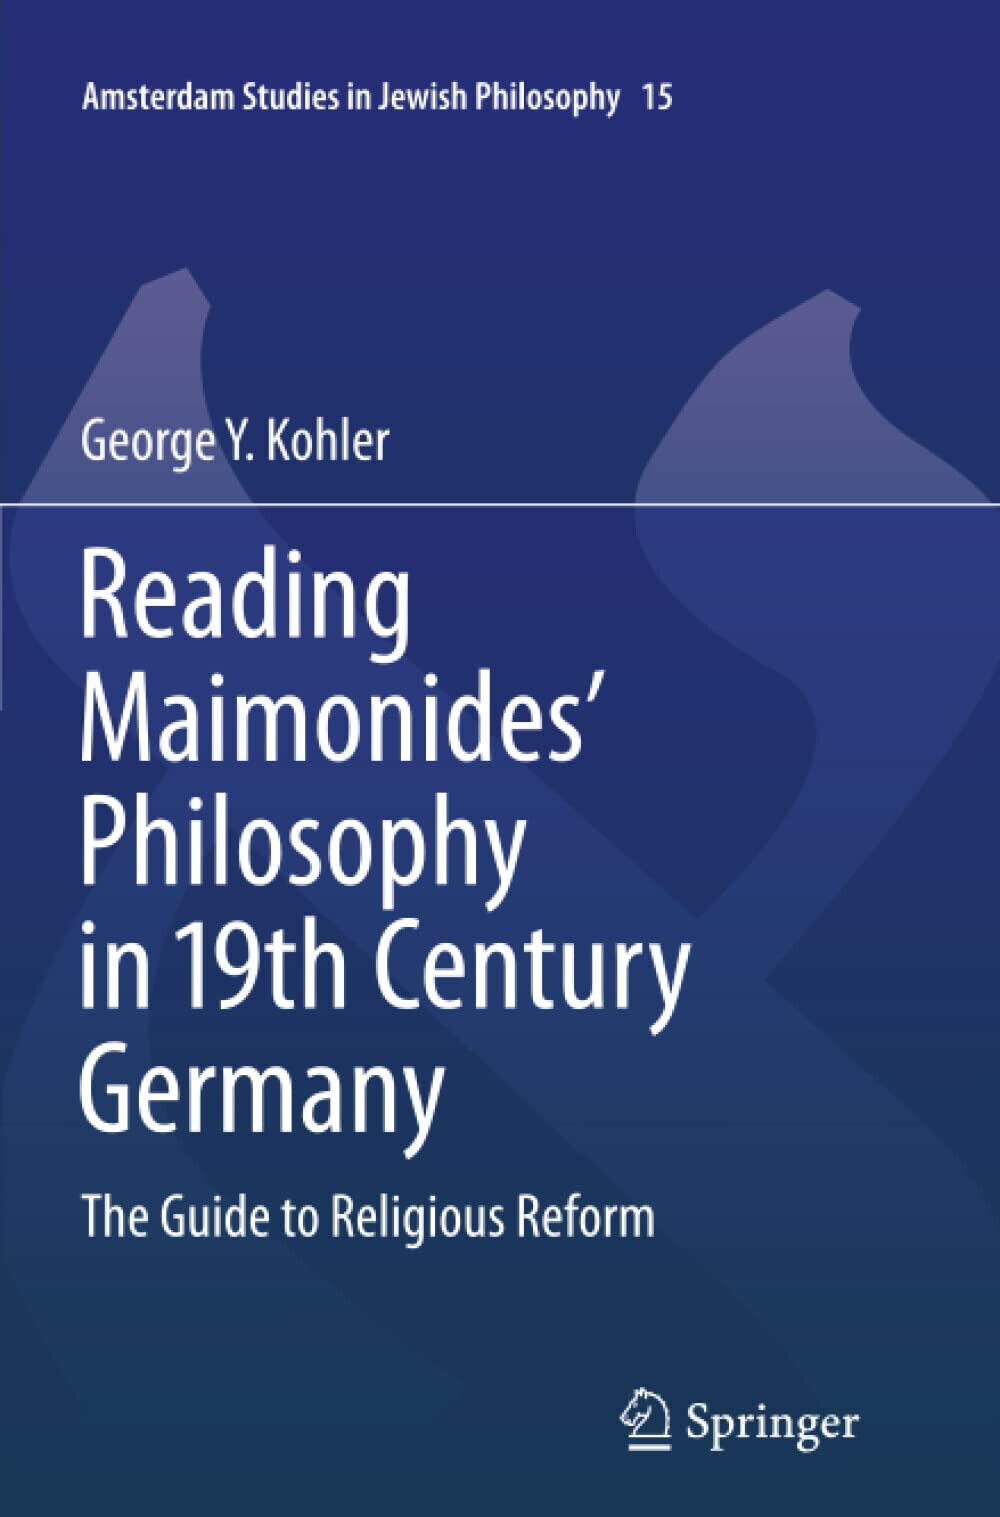 Reading Maimonides' Philosophy in 19th Century Germany - George Y. Kohler - 2014